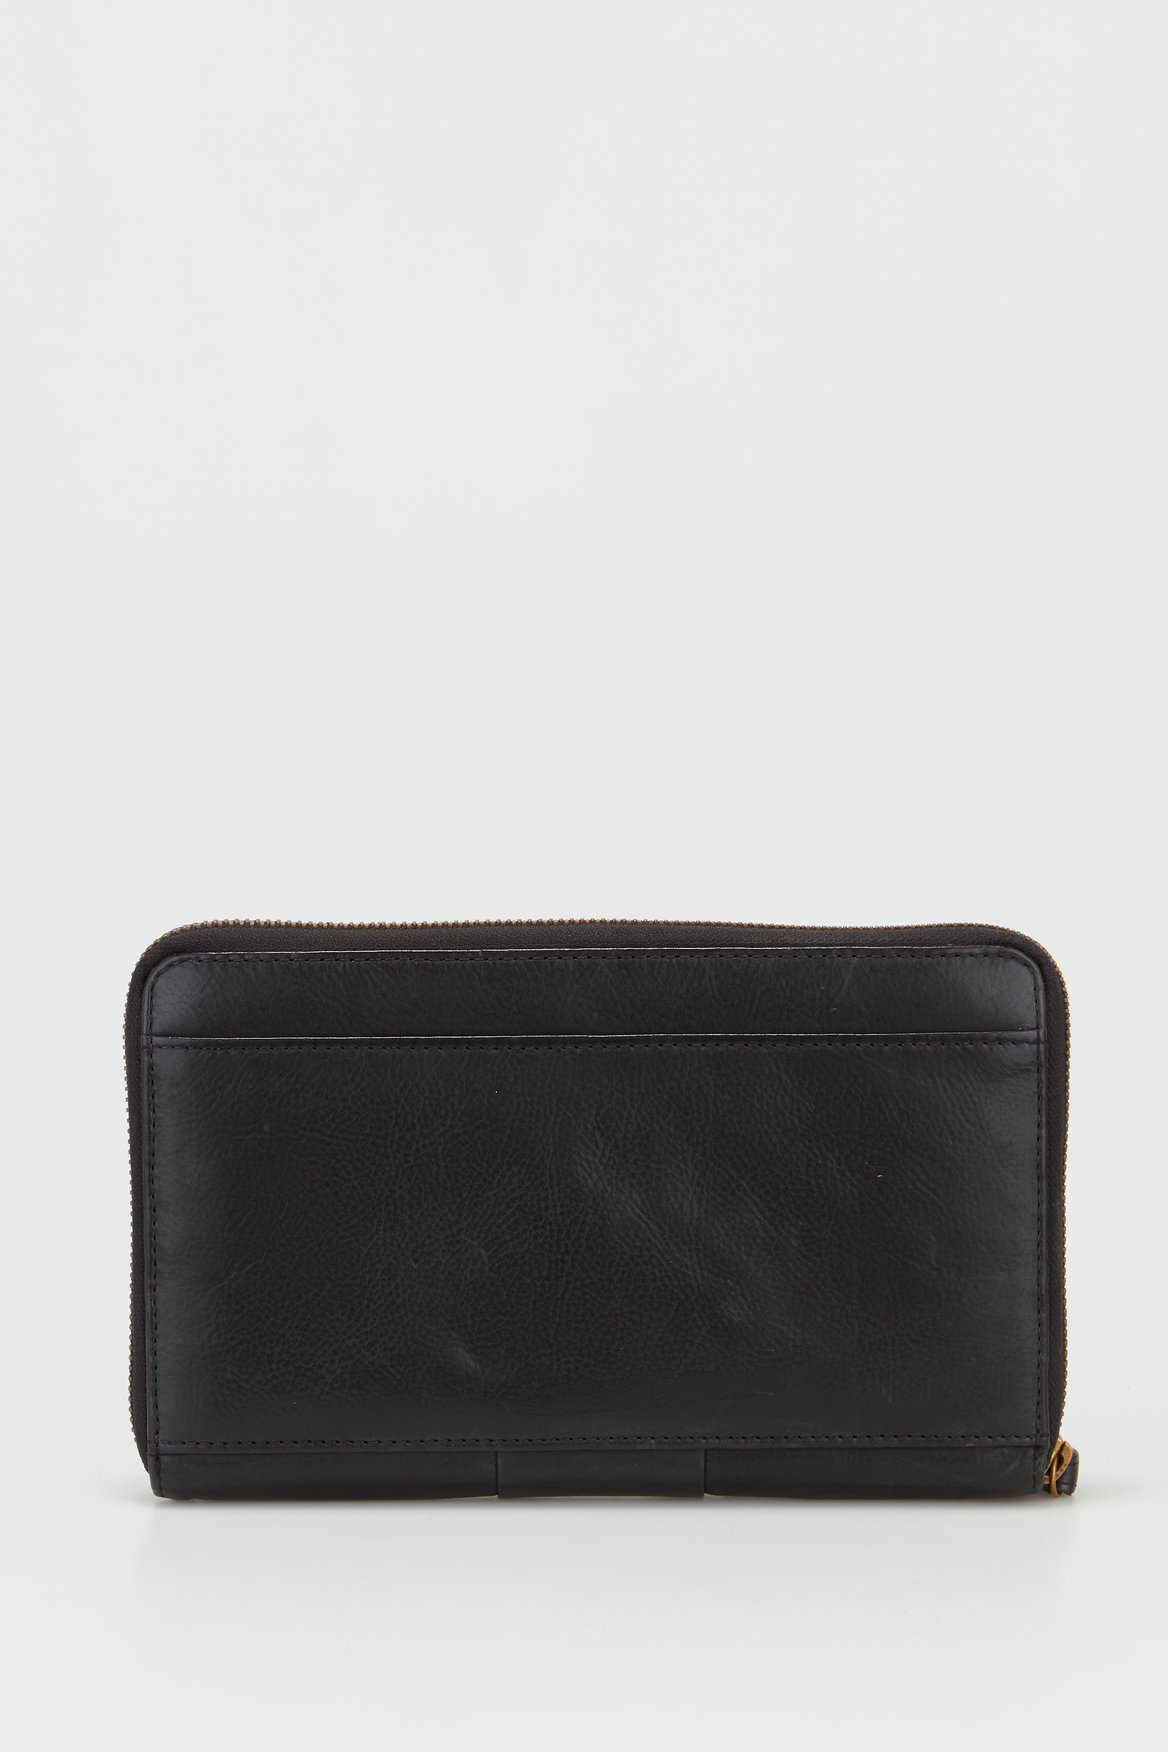 Evity Ava Leather Travel Wallet – Strandbags Australia